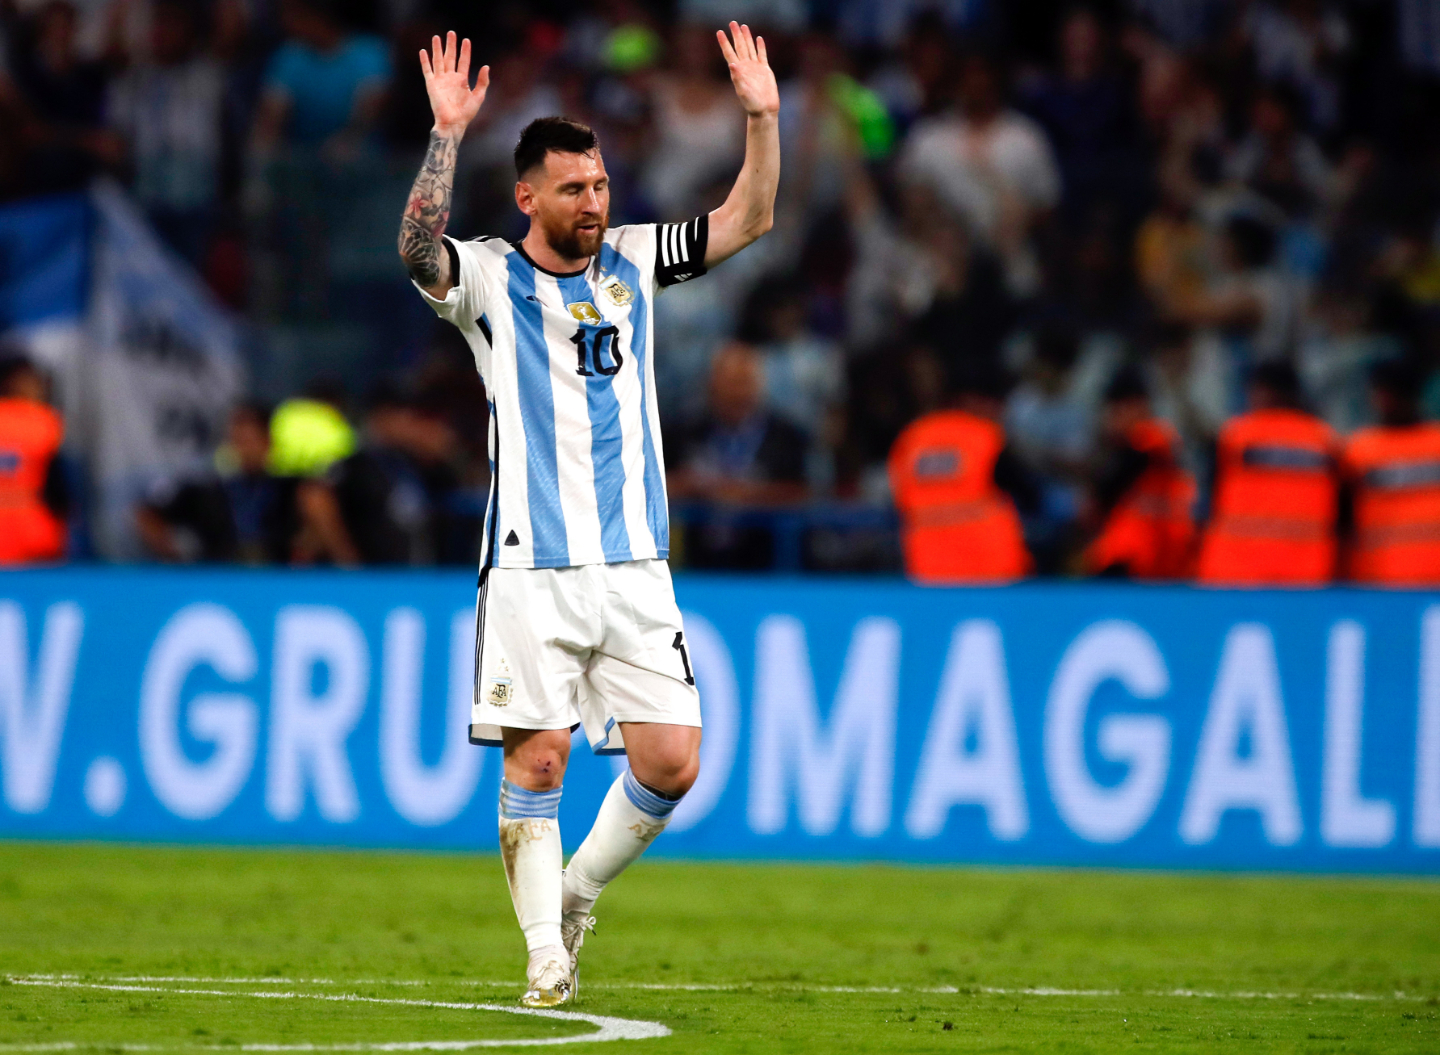 El enorme récord que rompió Lionel Messi con Argentina